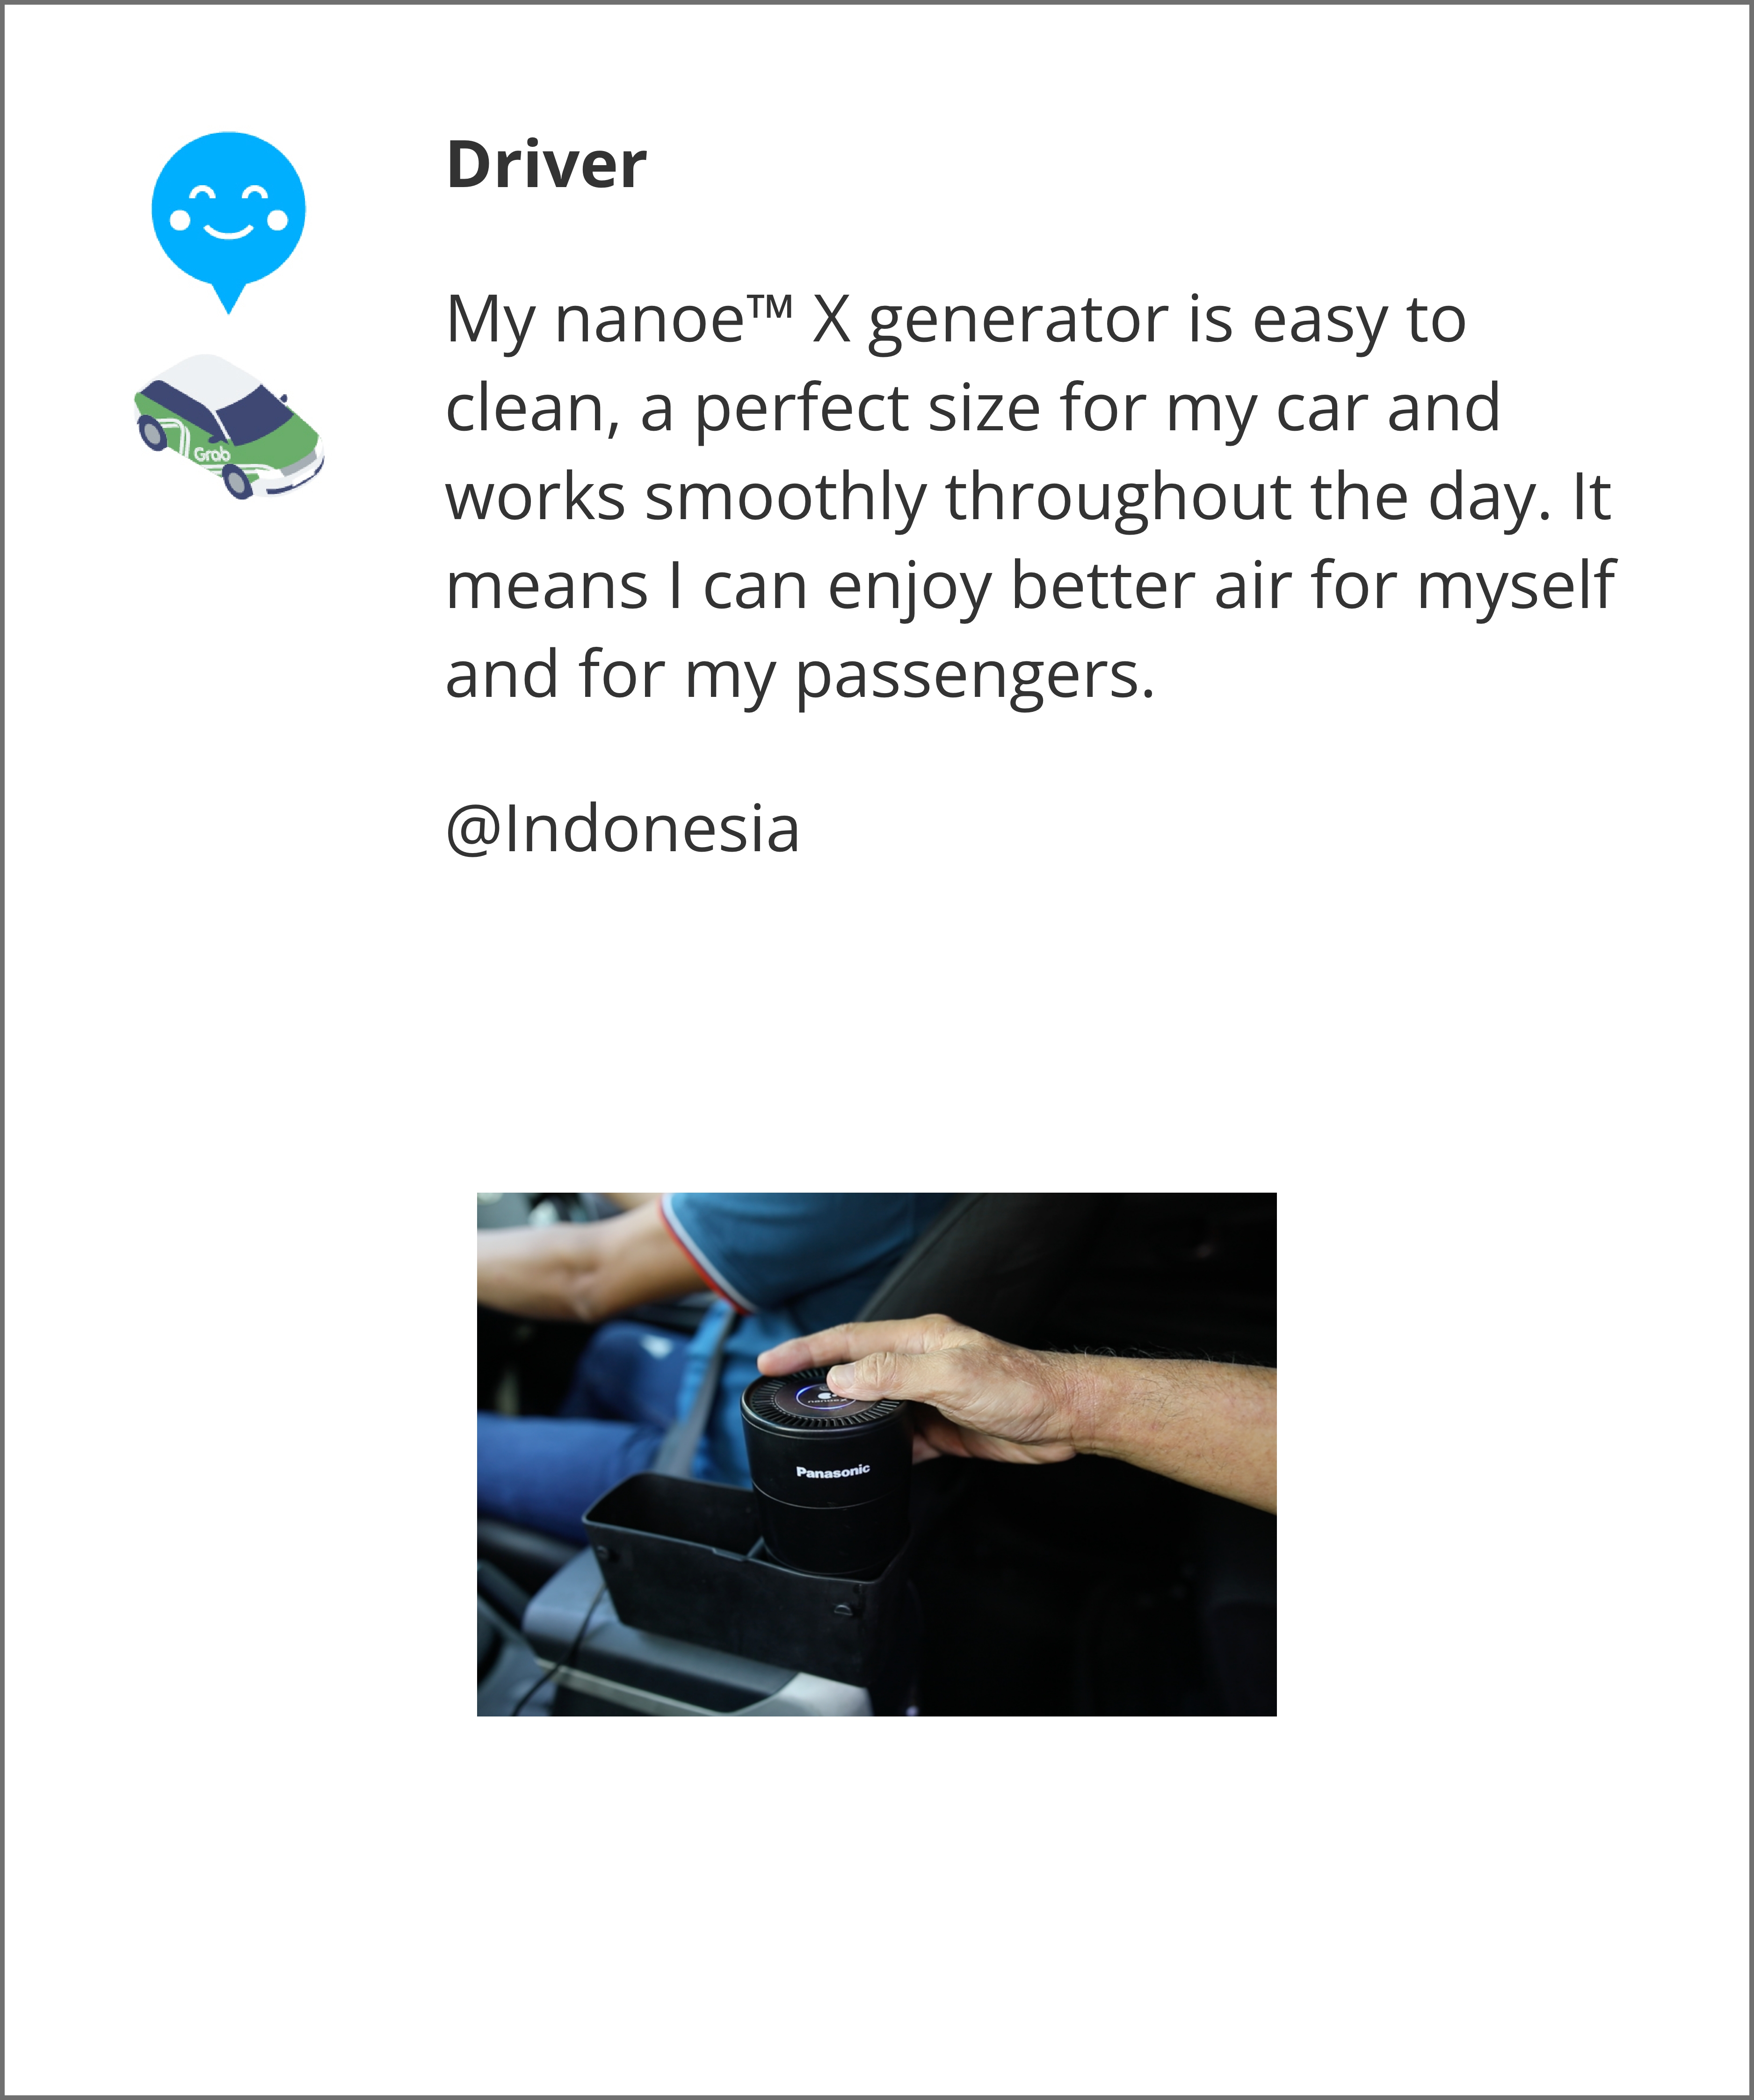 Customer pressing nanoe™X 's starting button in Grab car.